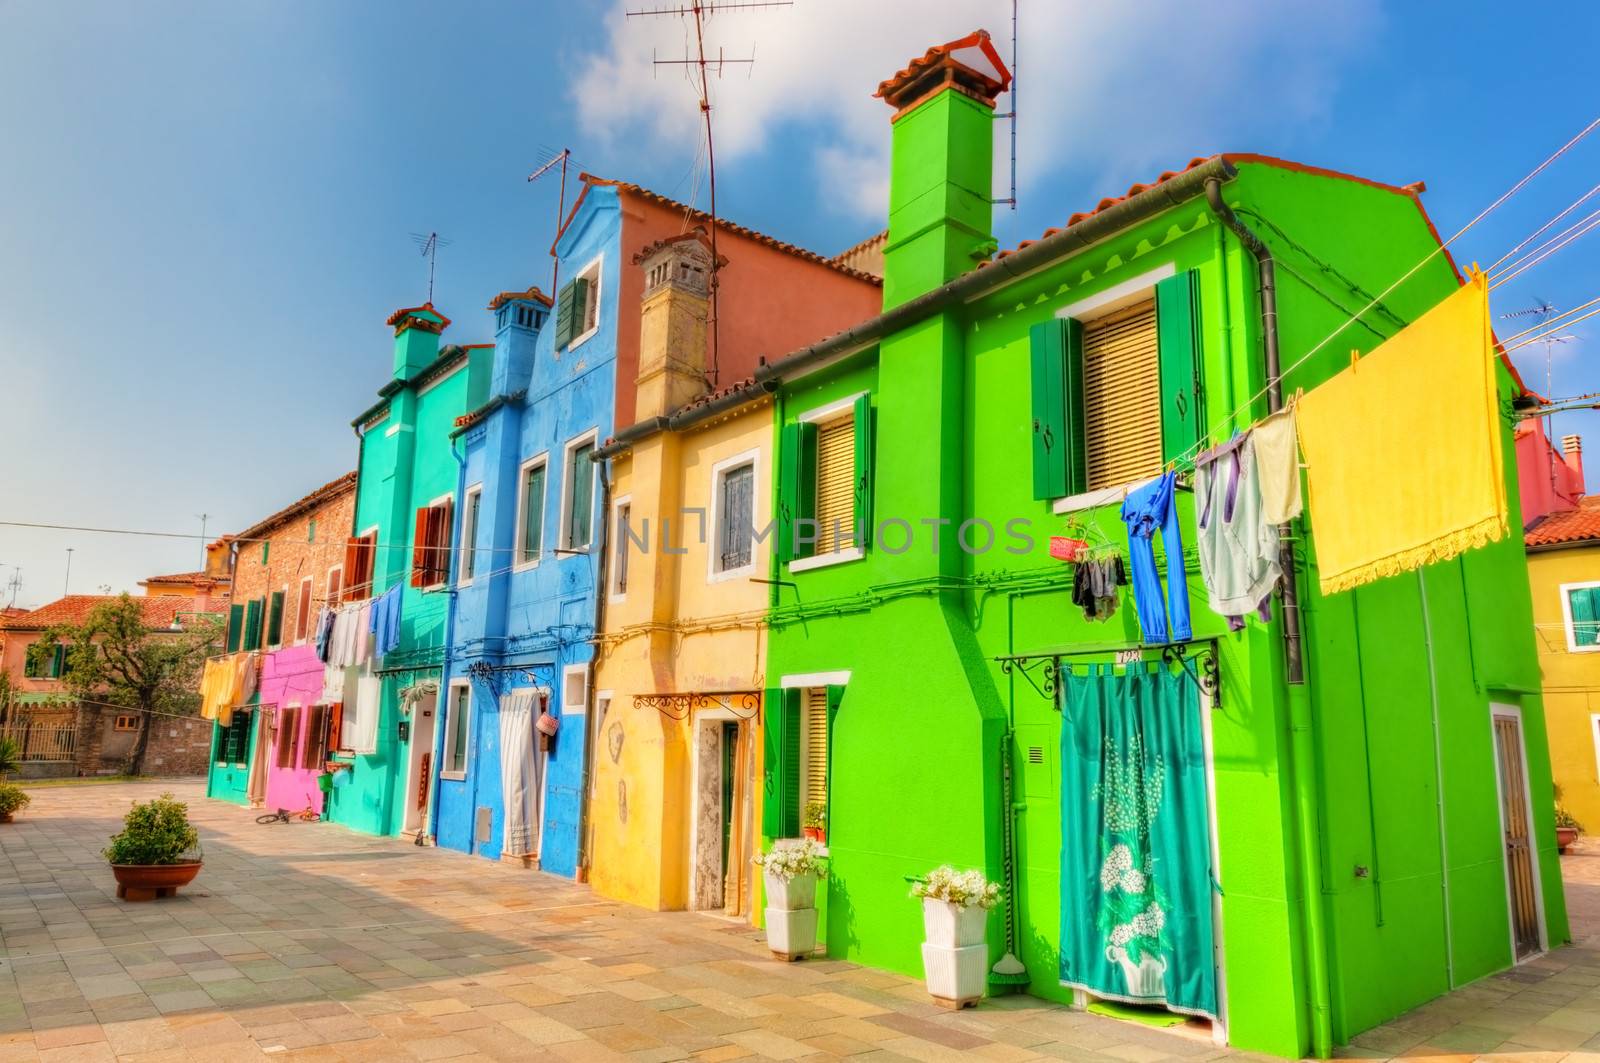 Colorful houses on Burano island, near Venice, Italy by photocreo